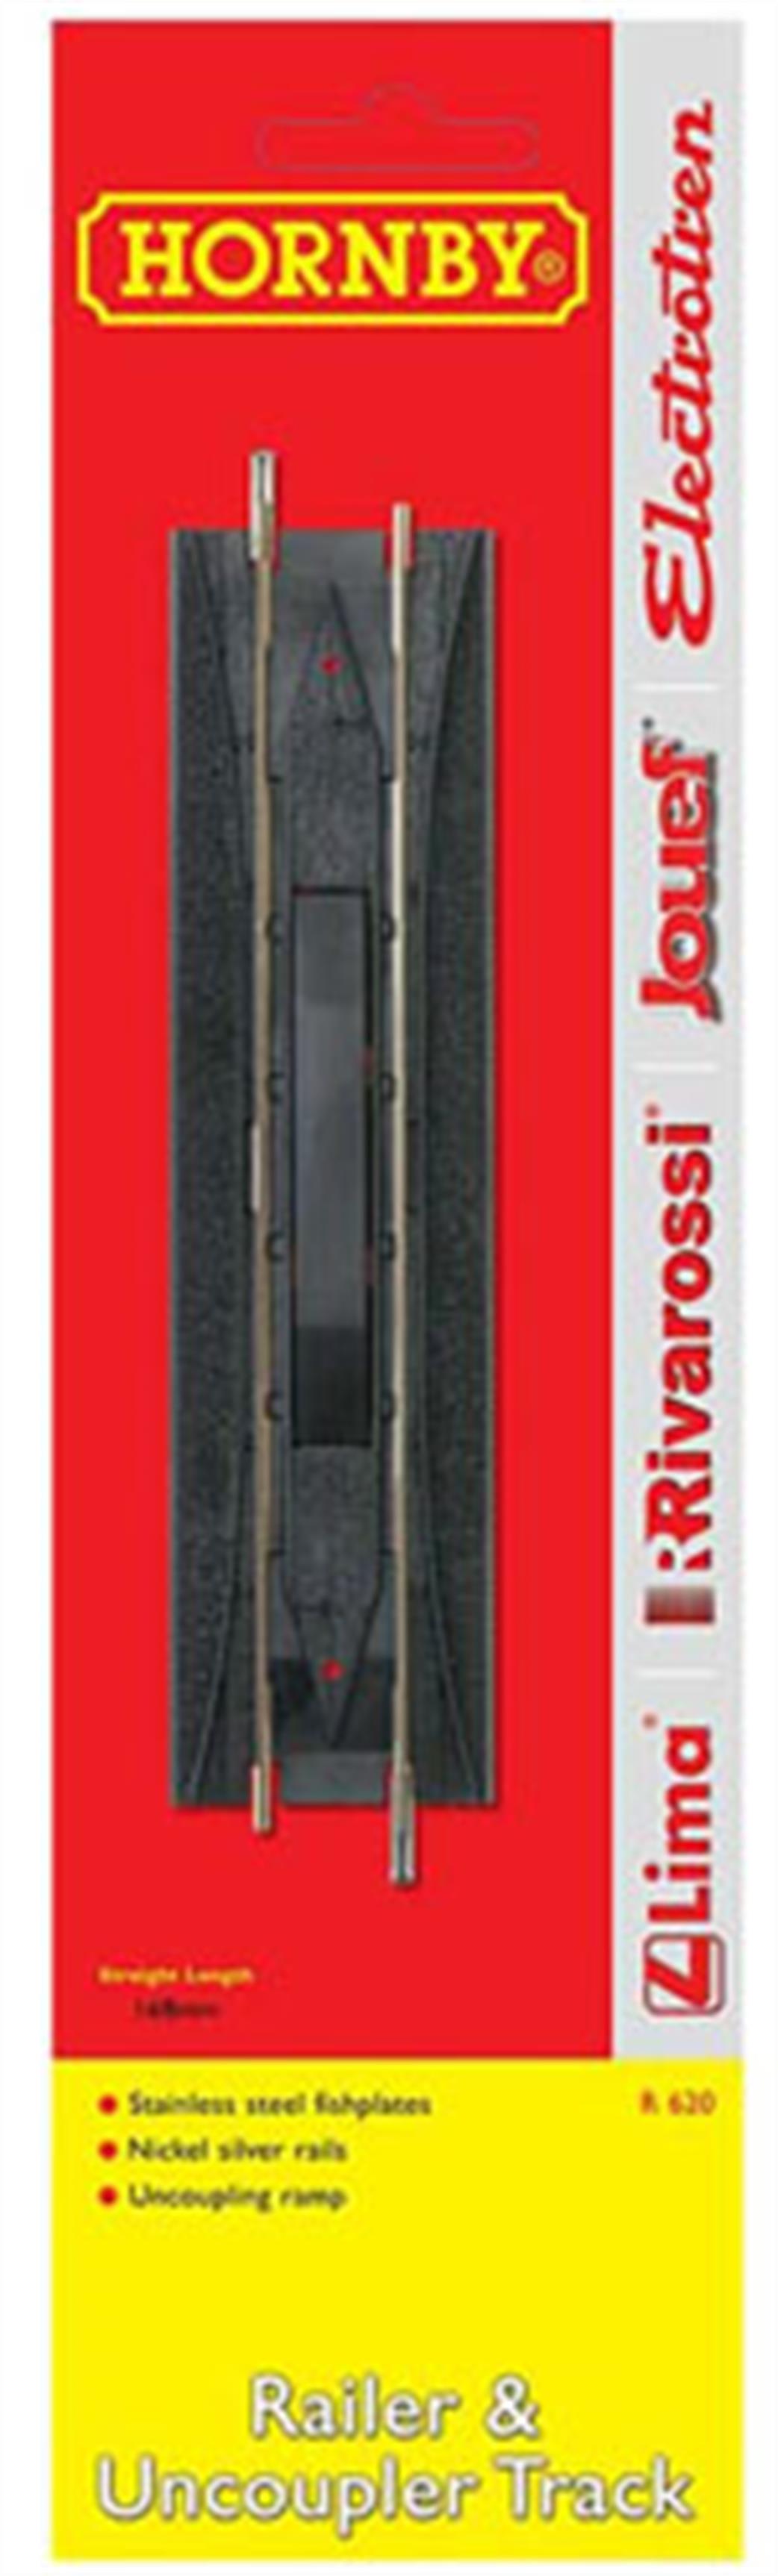 Hornby OO R620 Standard Straight Uncoupler/Re-railer Track